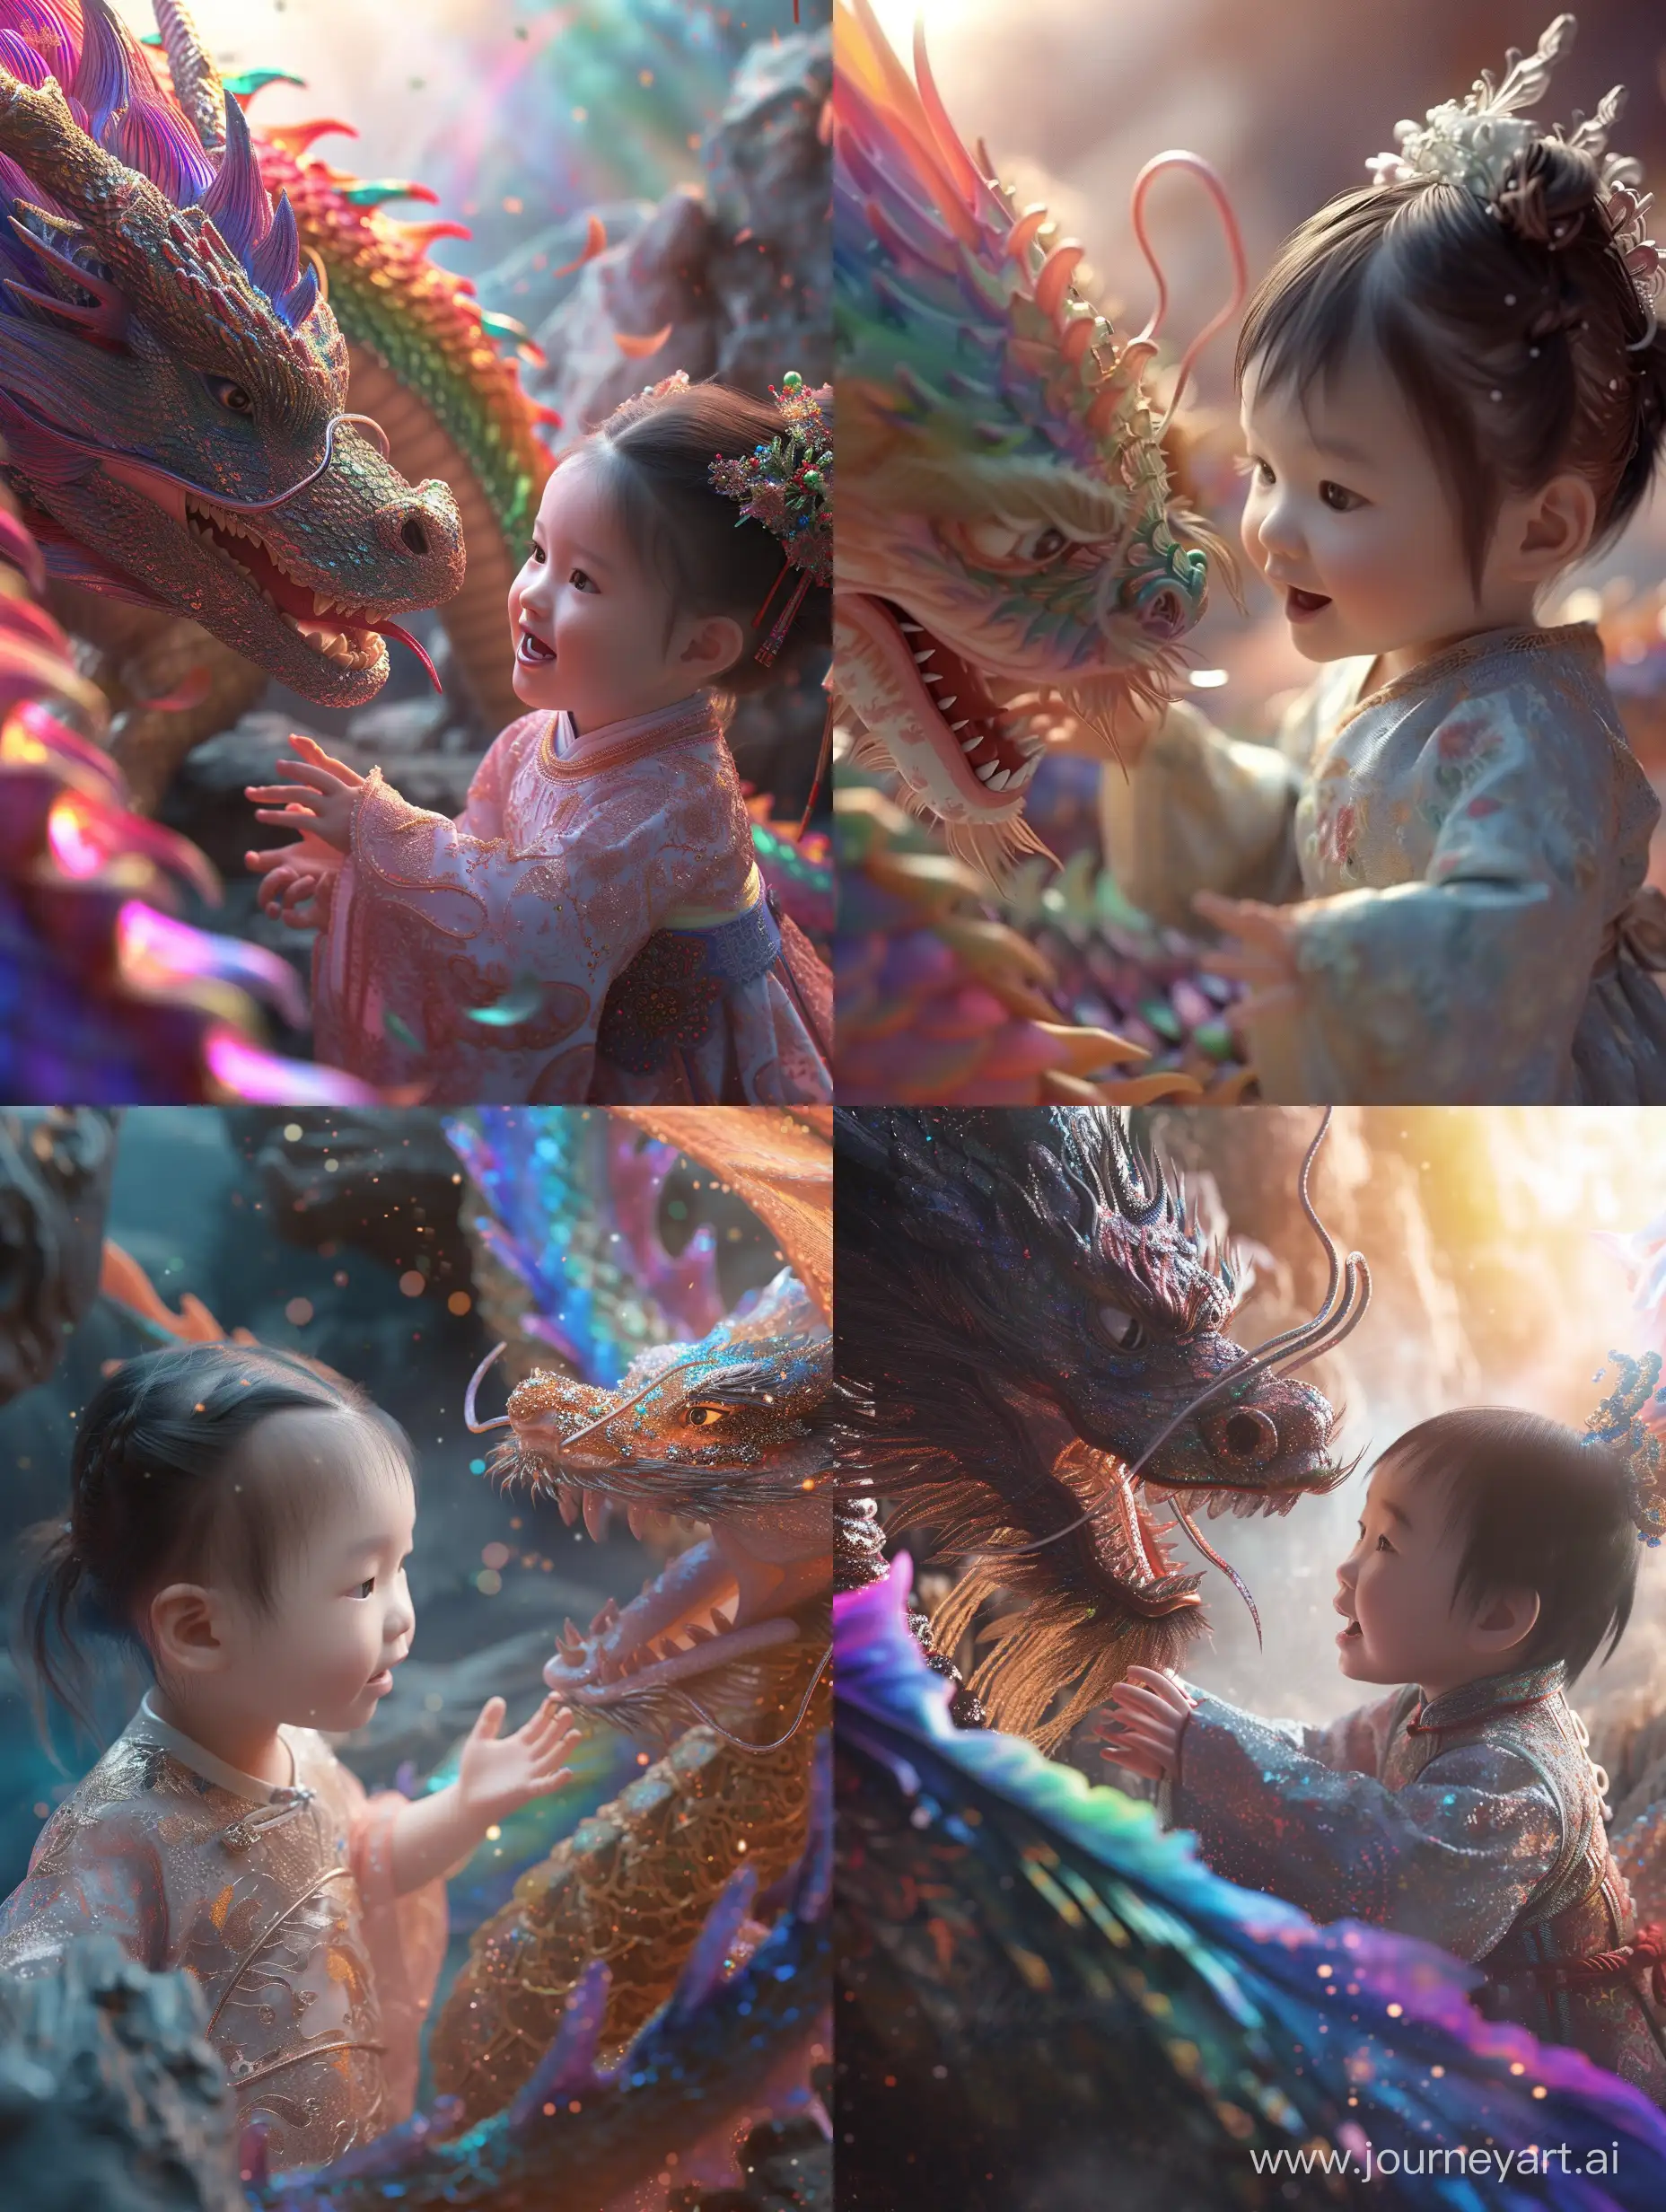 Joyful-HanfuClad-Toddler-with-Rainbow-Dragon-in-Enchanting-8K-HDR-Rendering